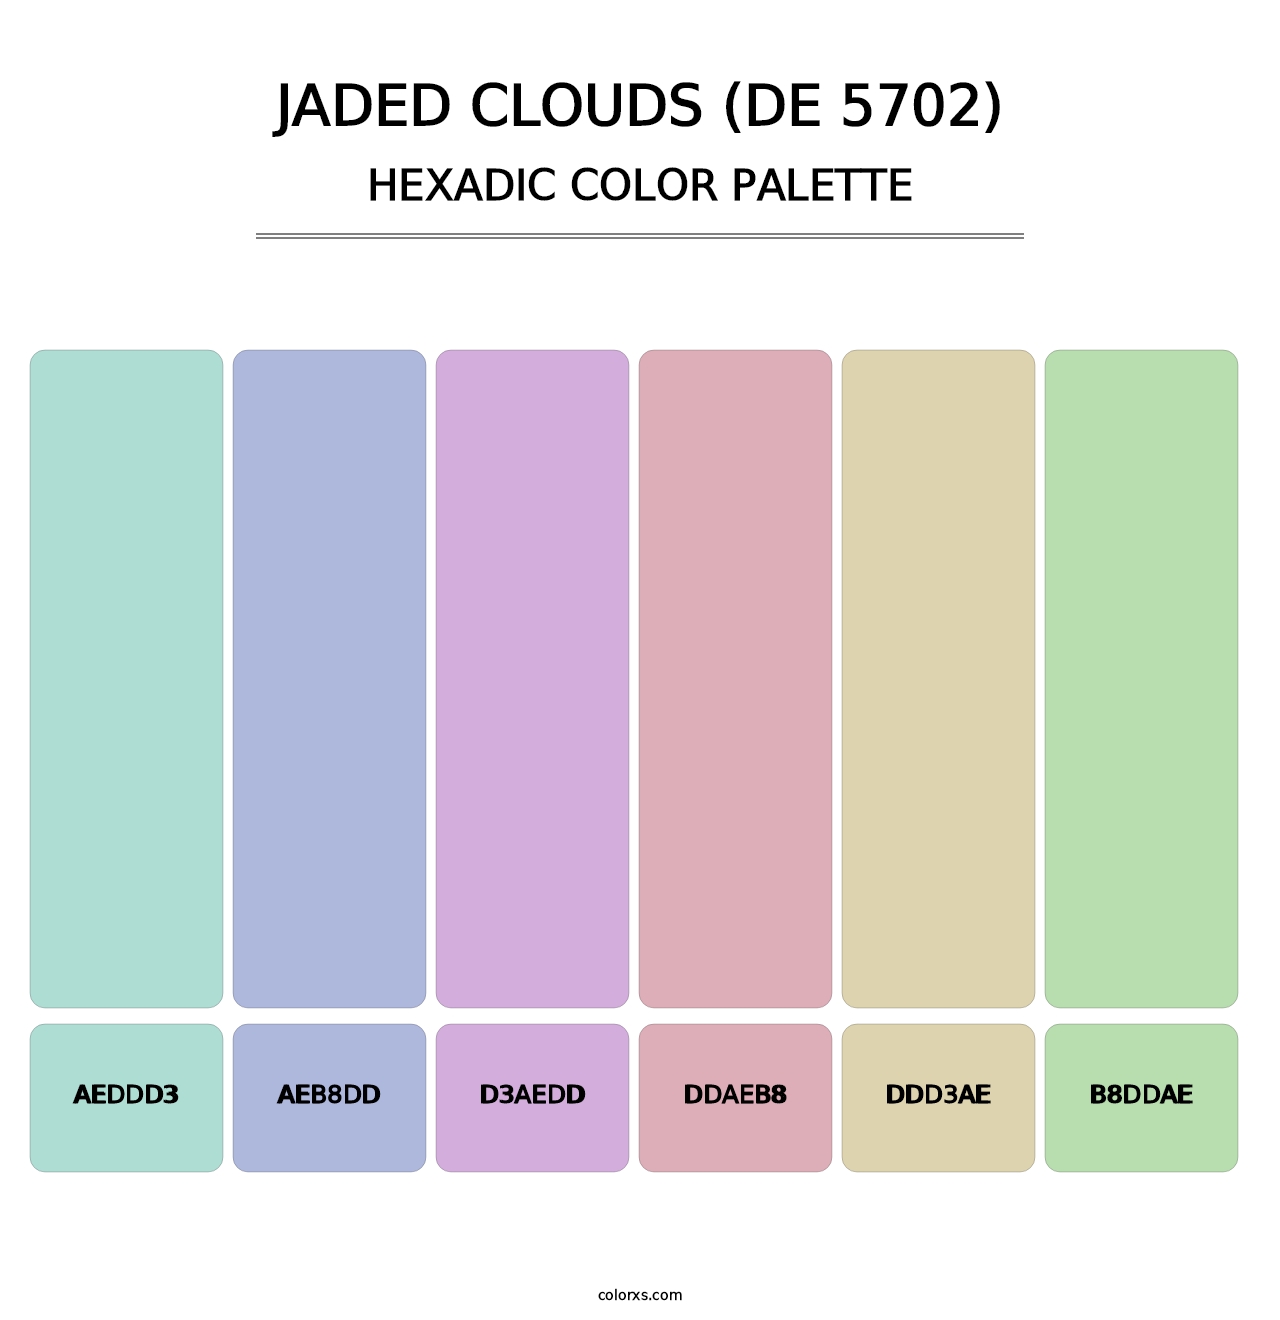 Jaded Clouds (DE 5702) - Hexadic Color Palette